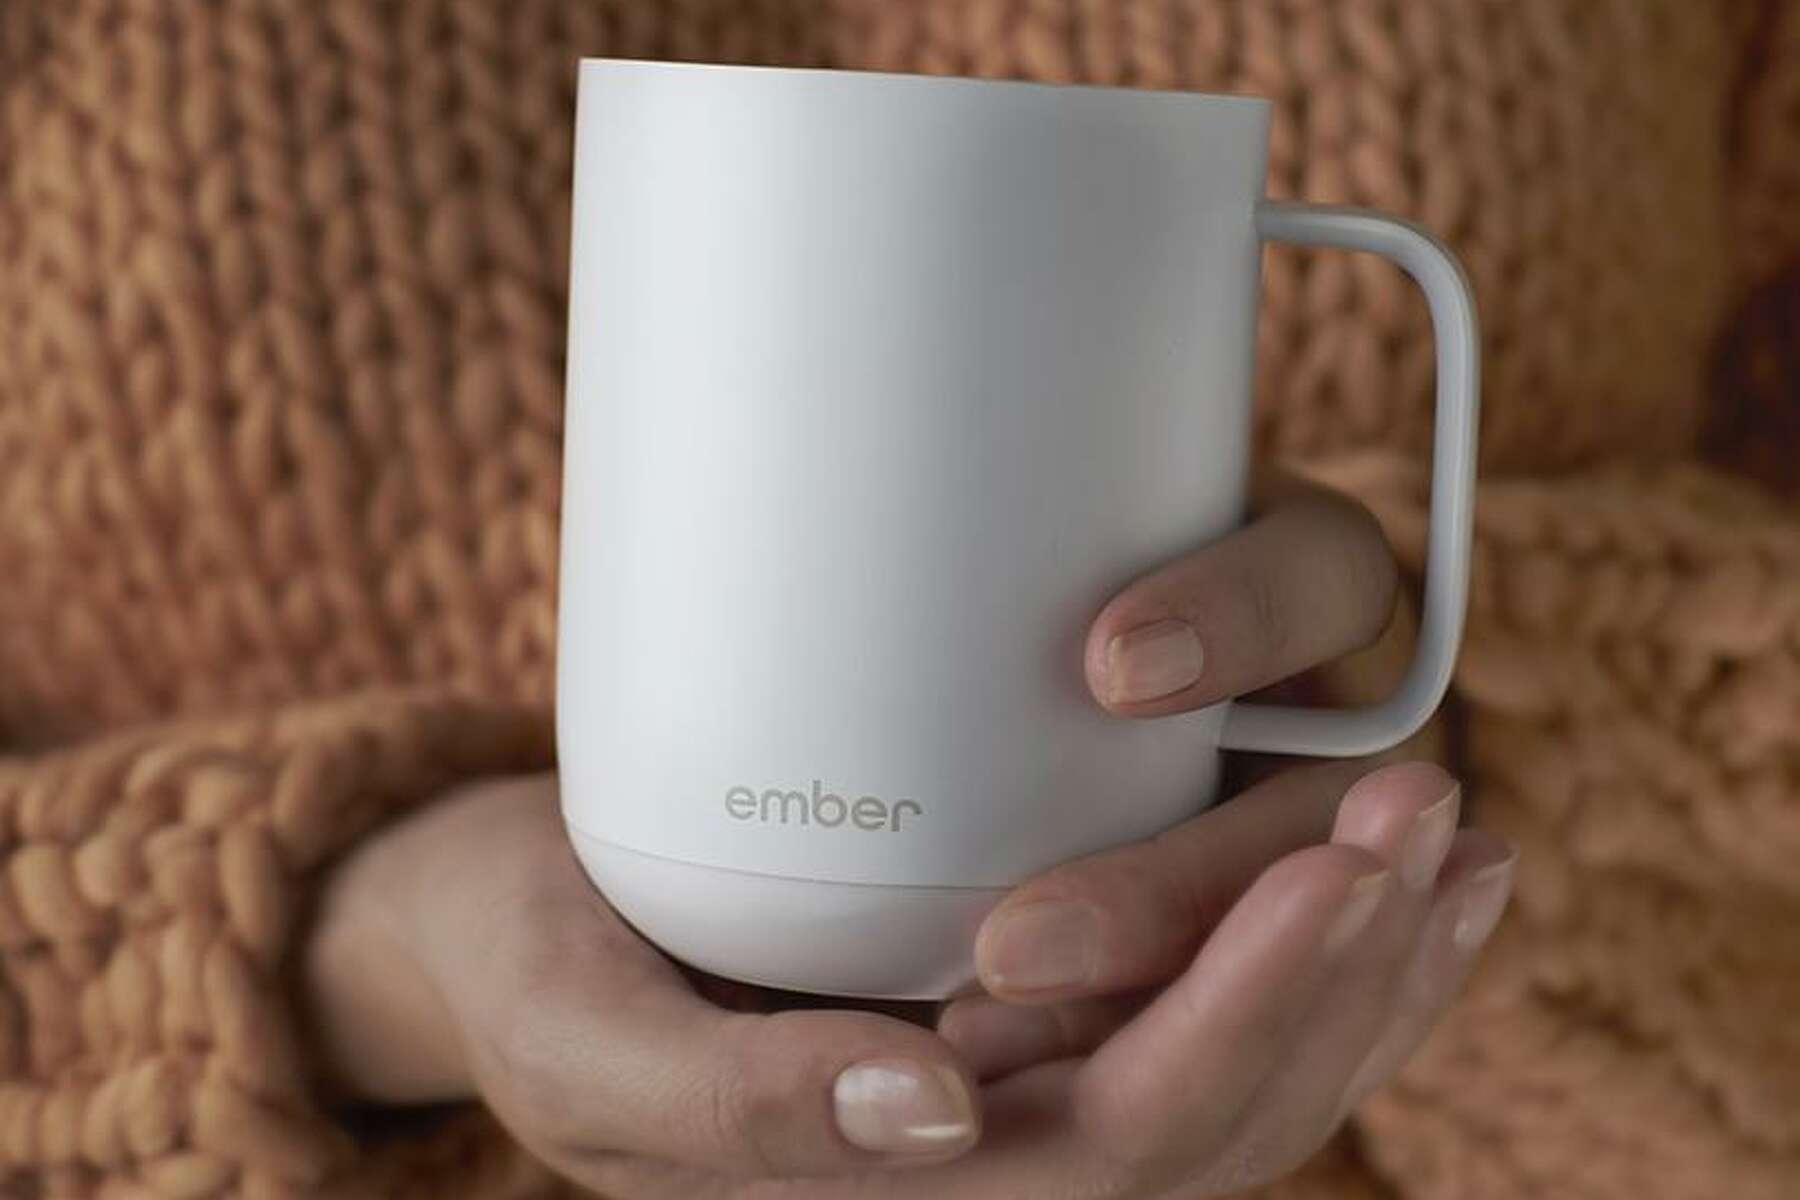 Ember Coffee Mug Review 2019